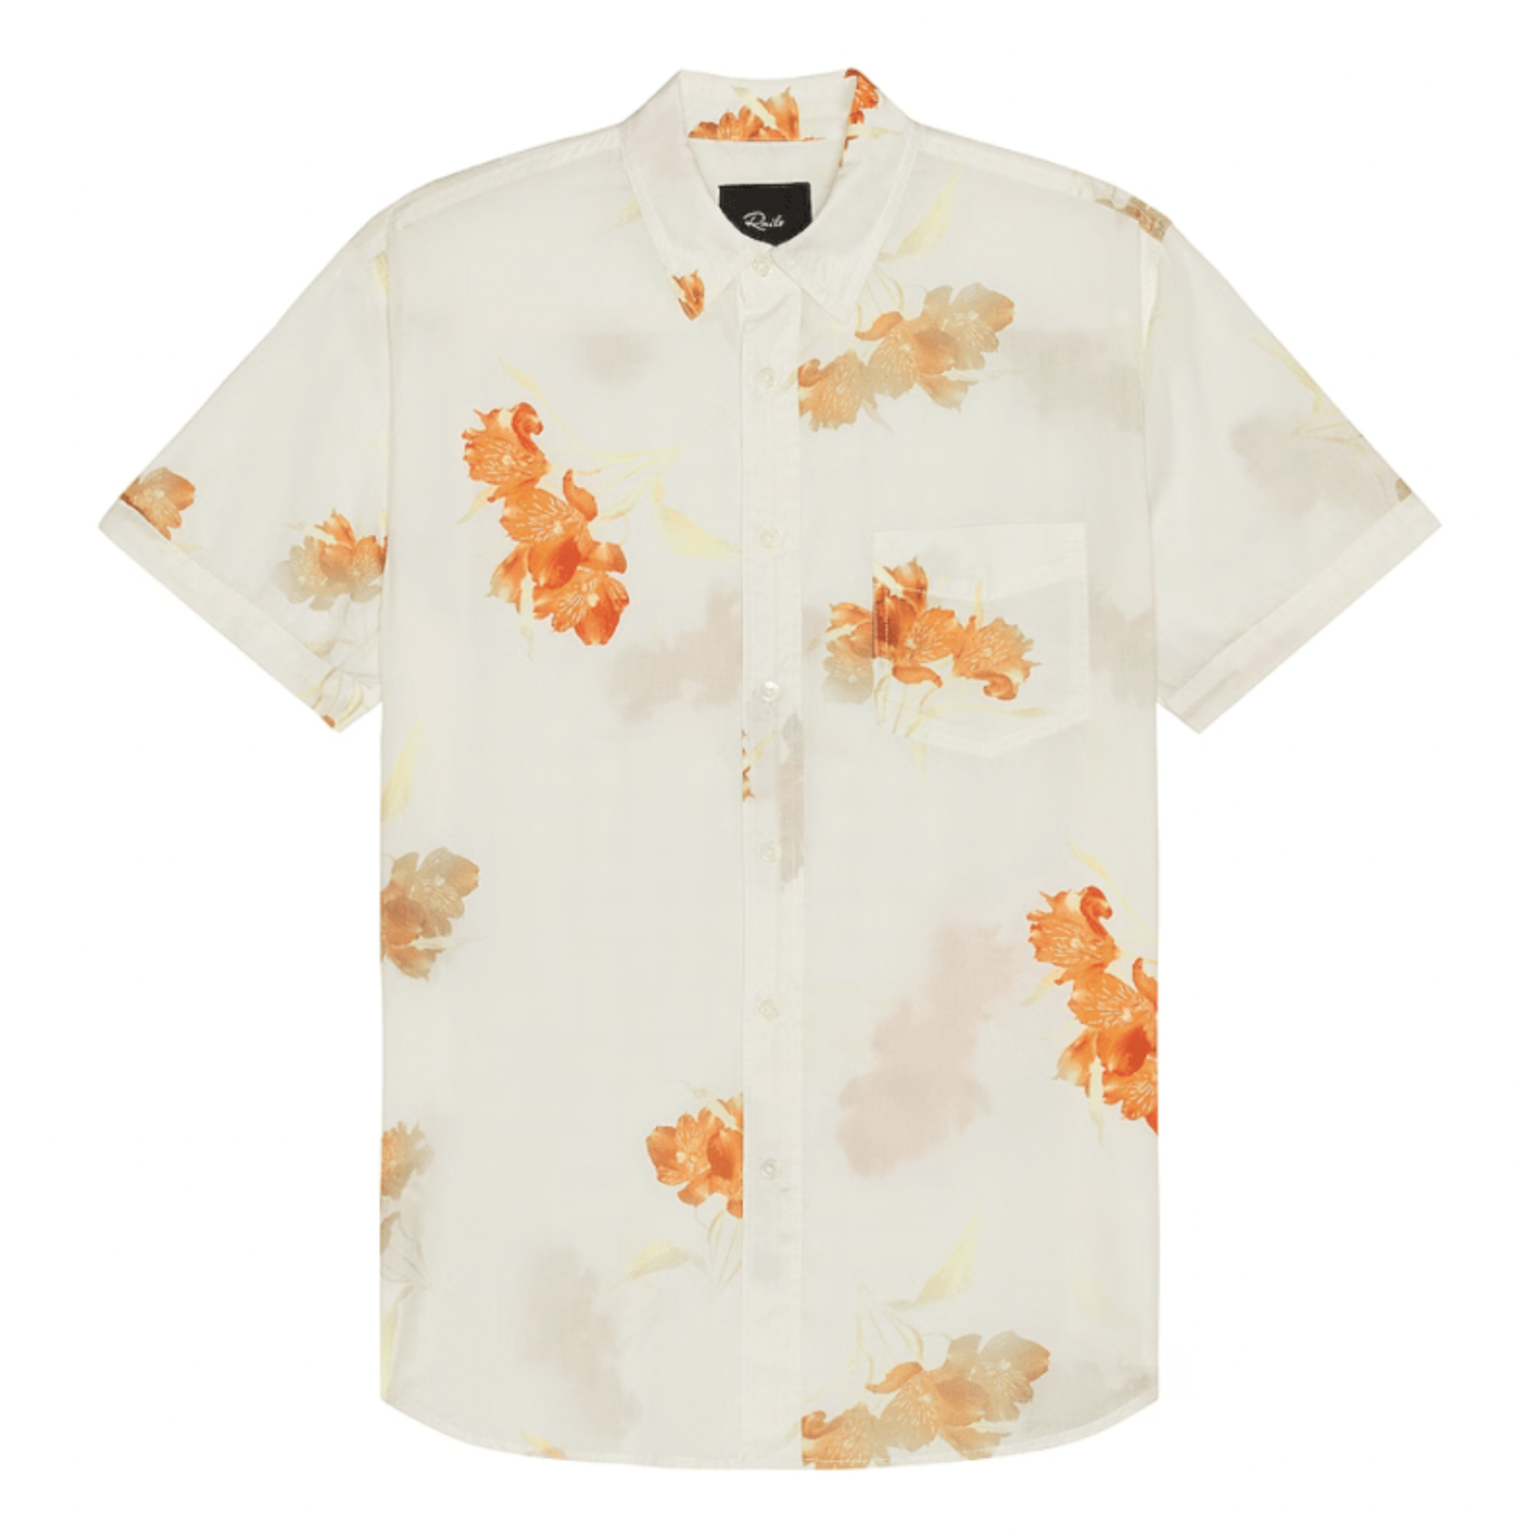 Monaco Shirt - Surreal Flower White